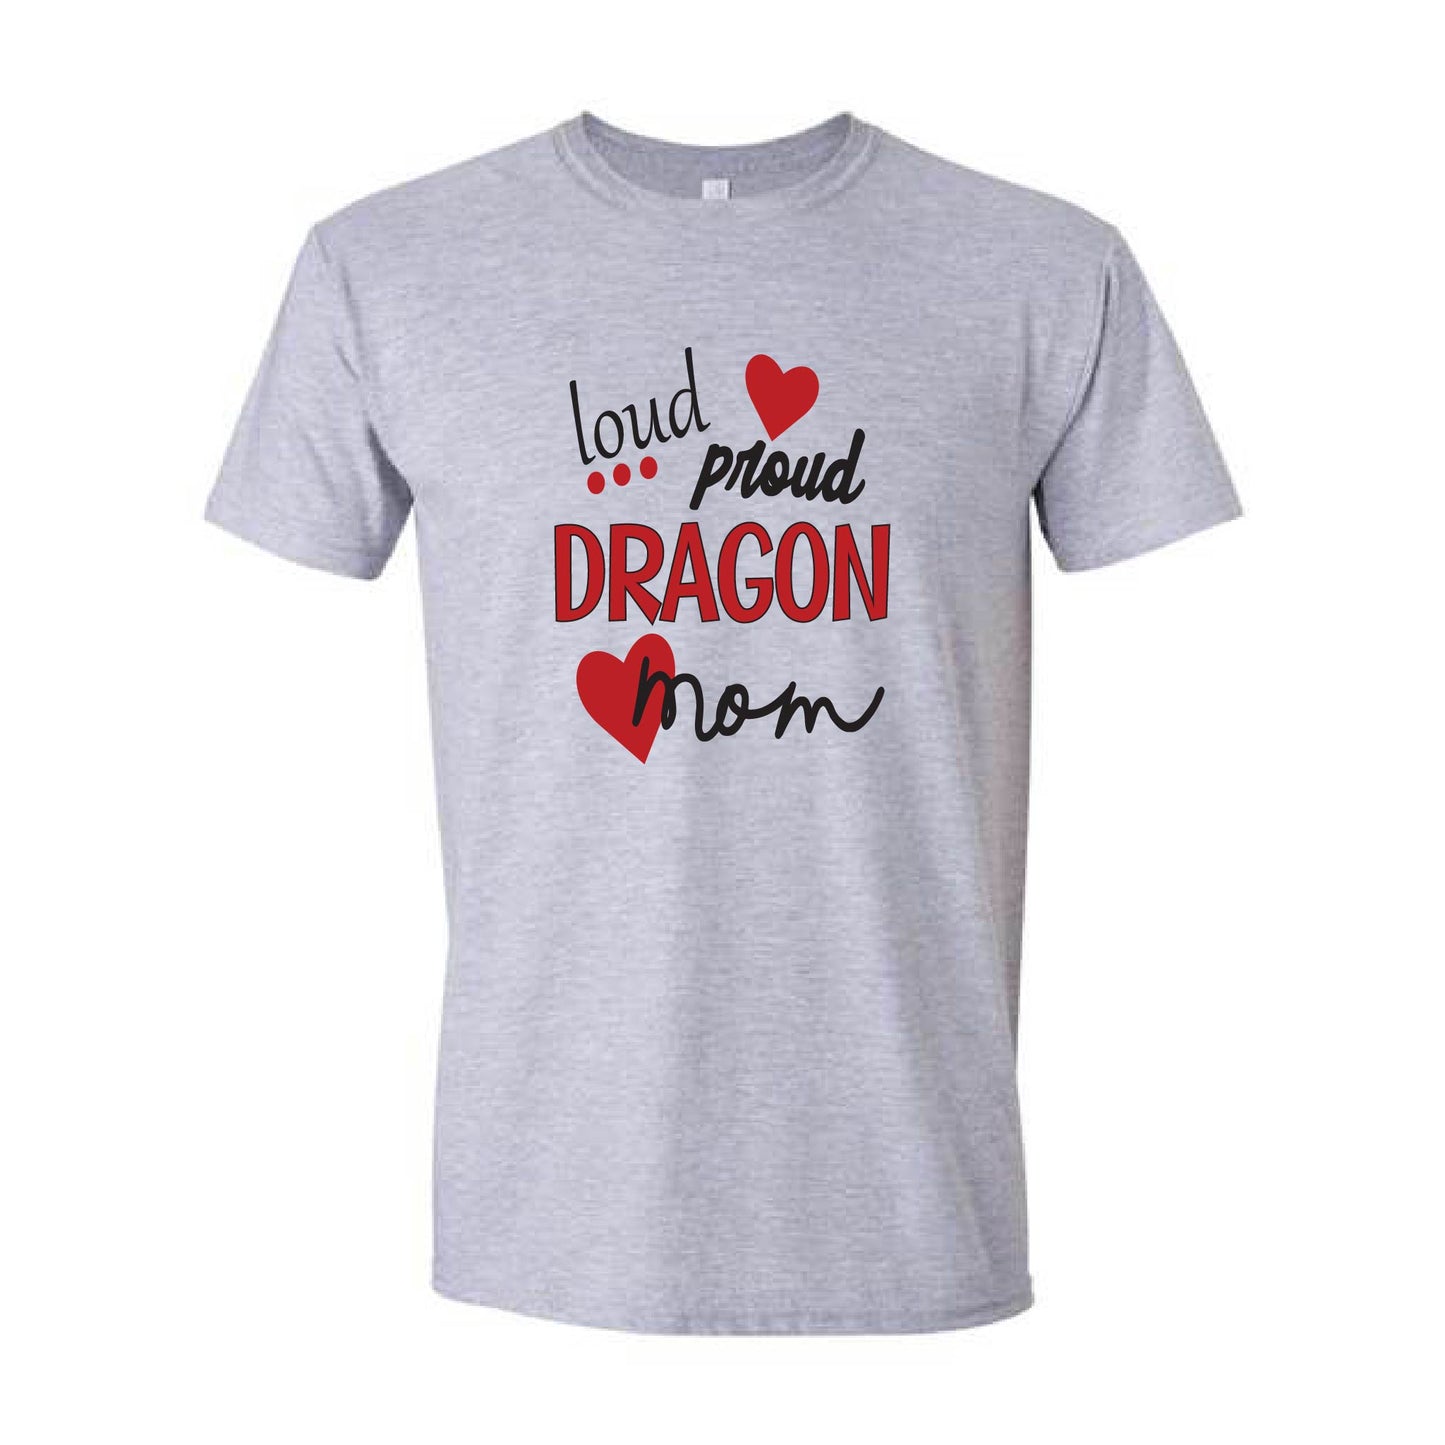 Apparel Drive - Loud Proud Dragon Mom